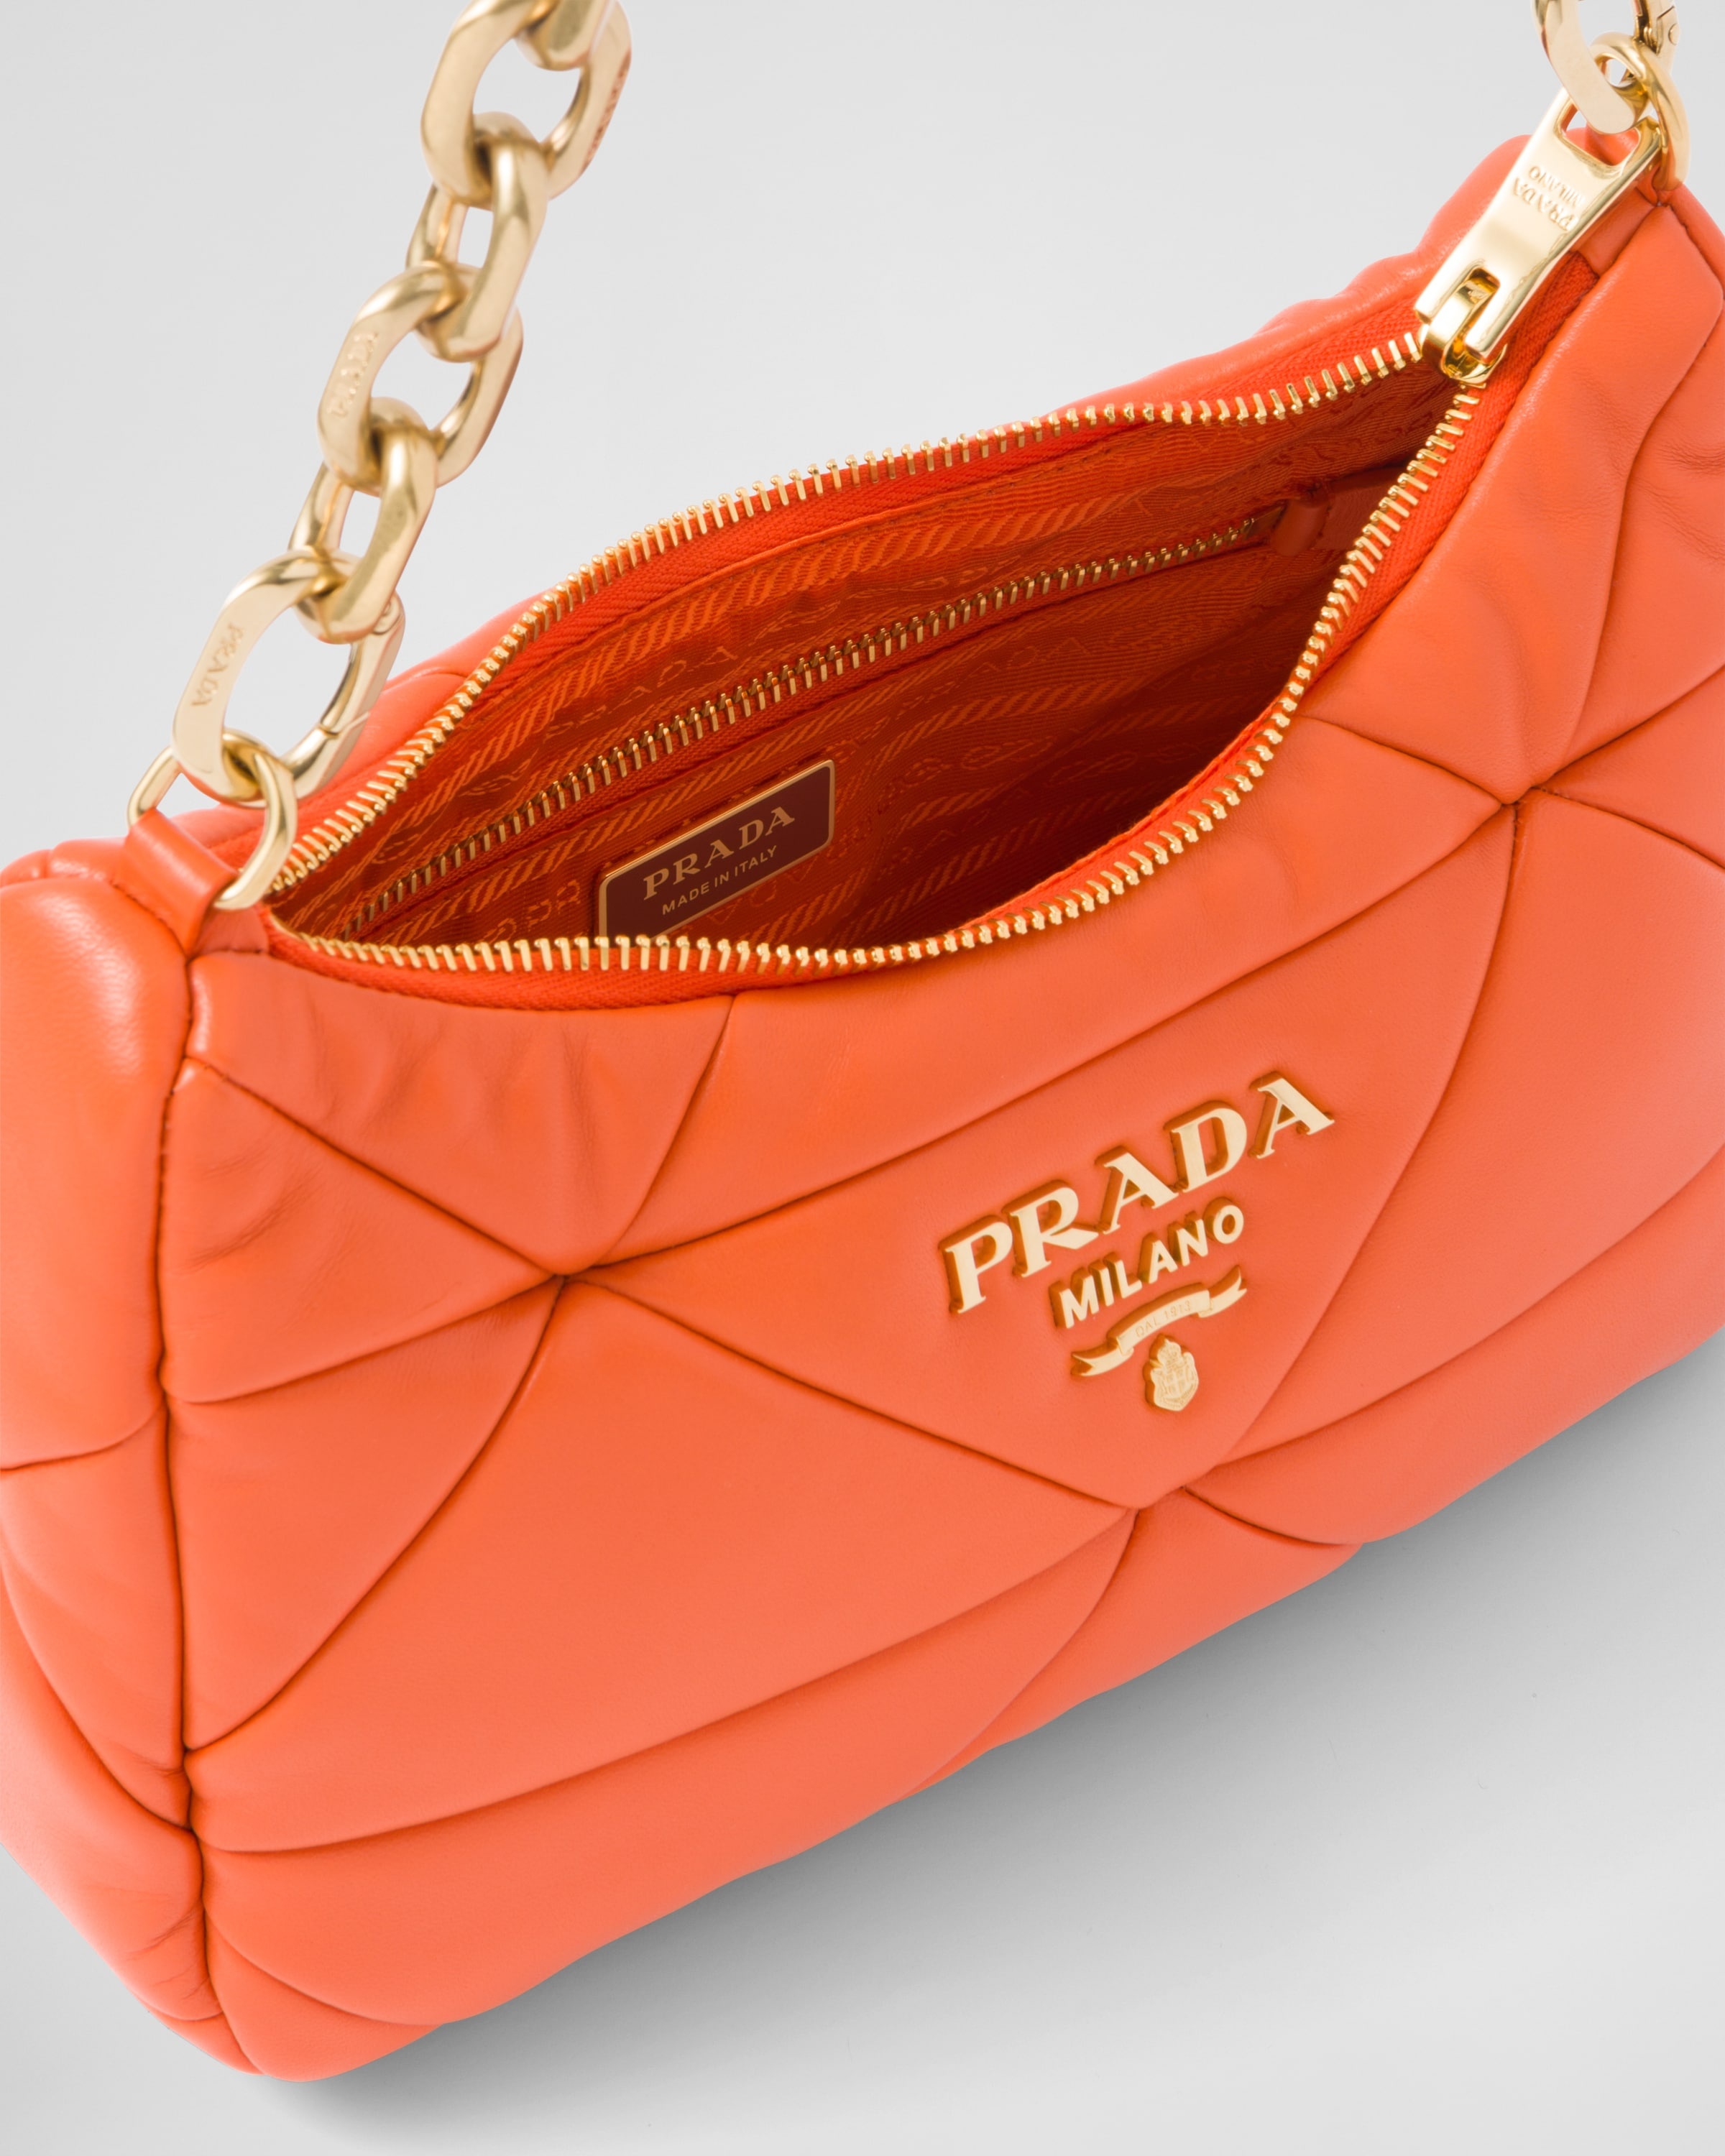 Prada Prada System nappa leather patchwork bag | REVERSIBLE